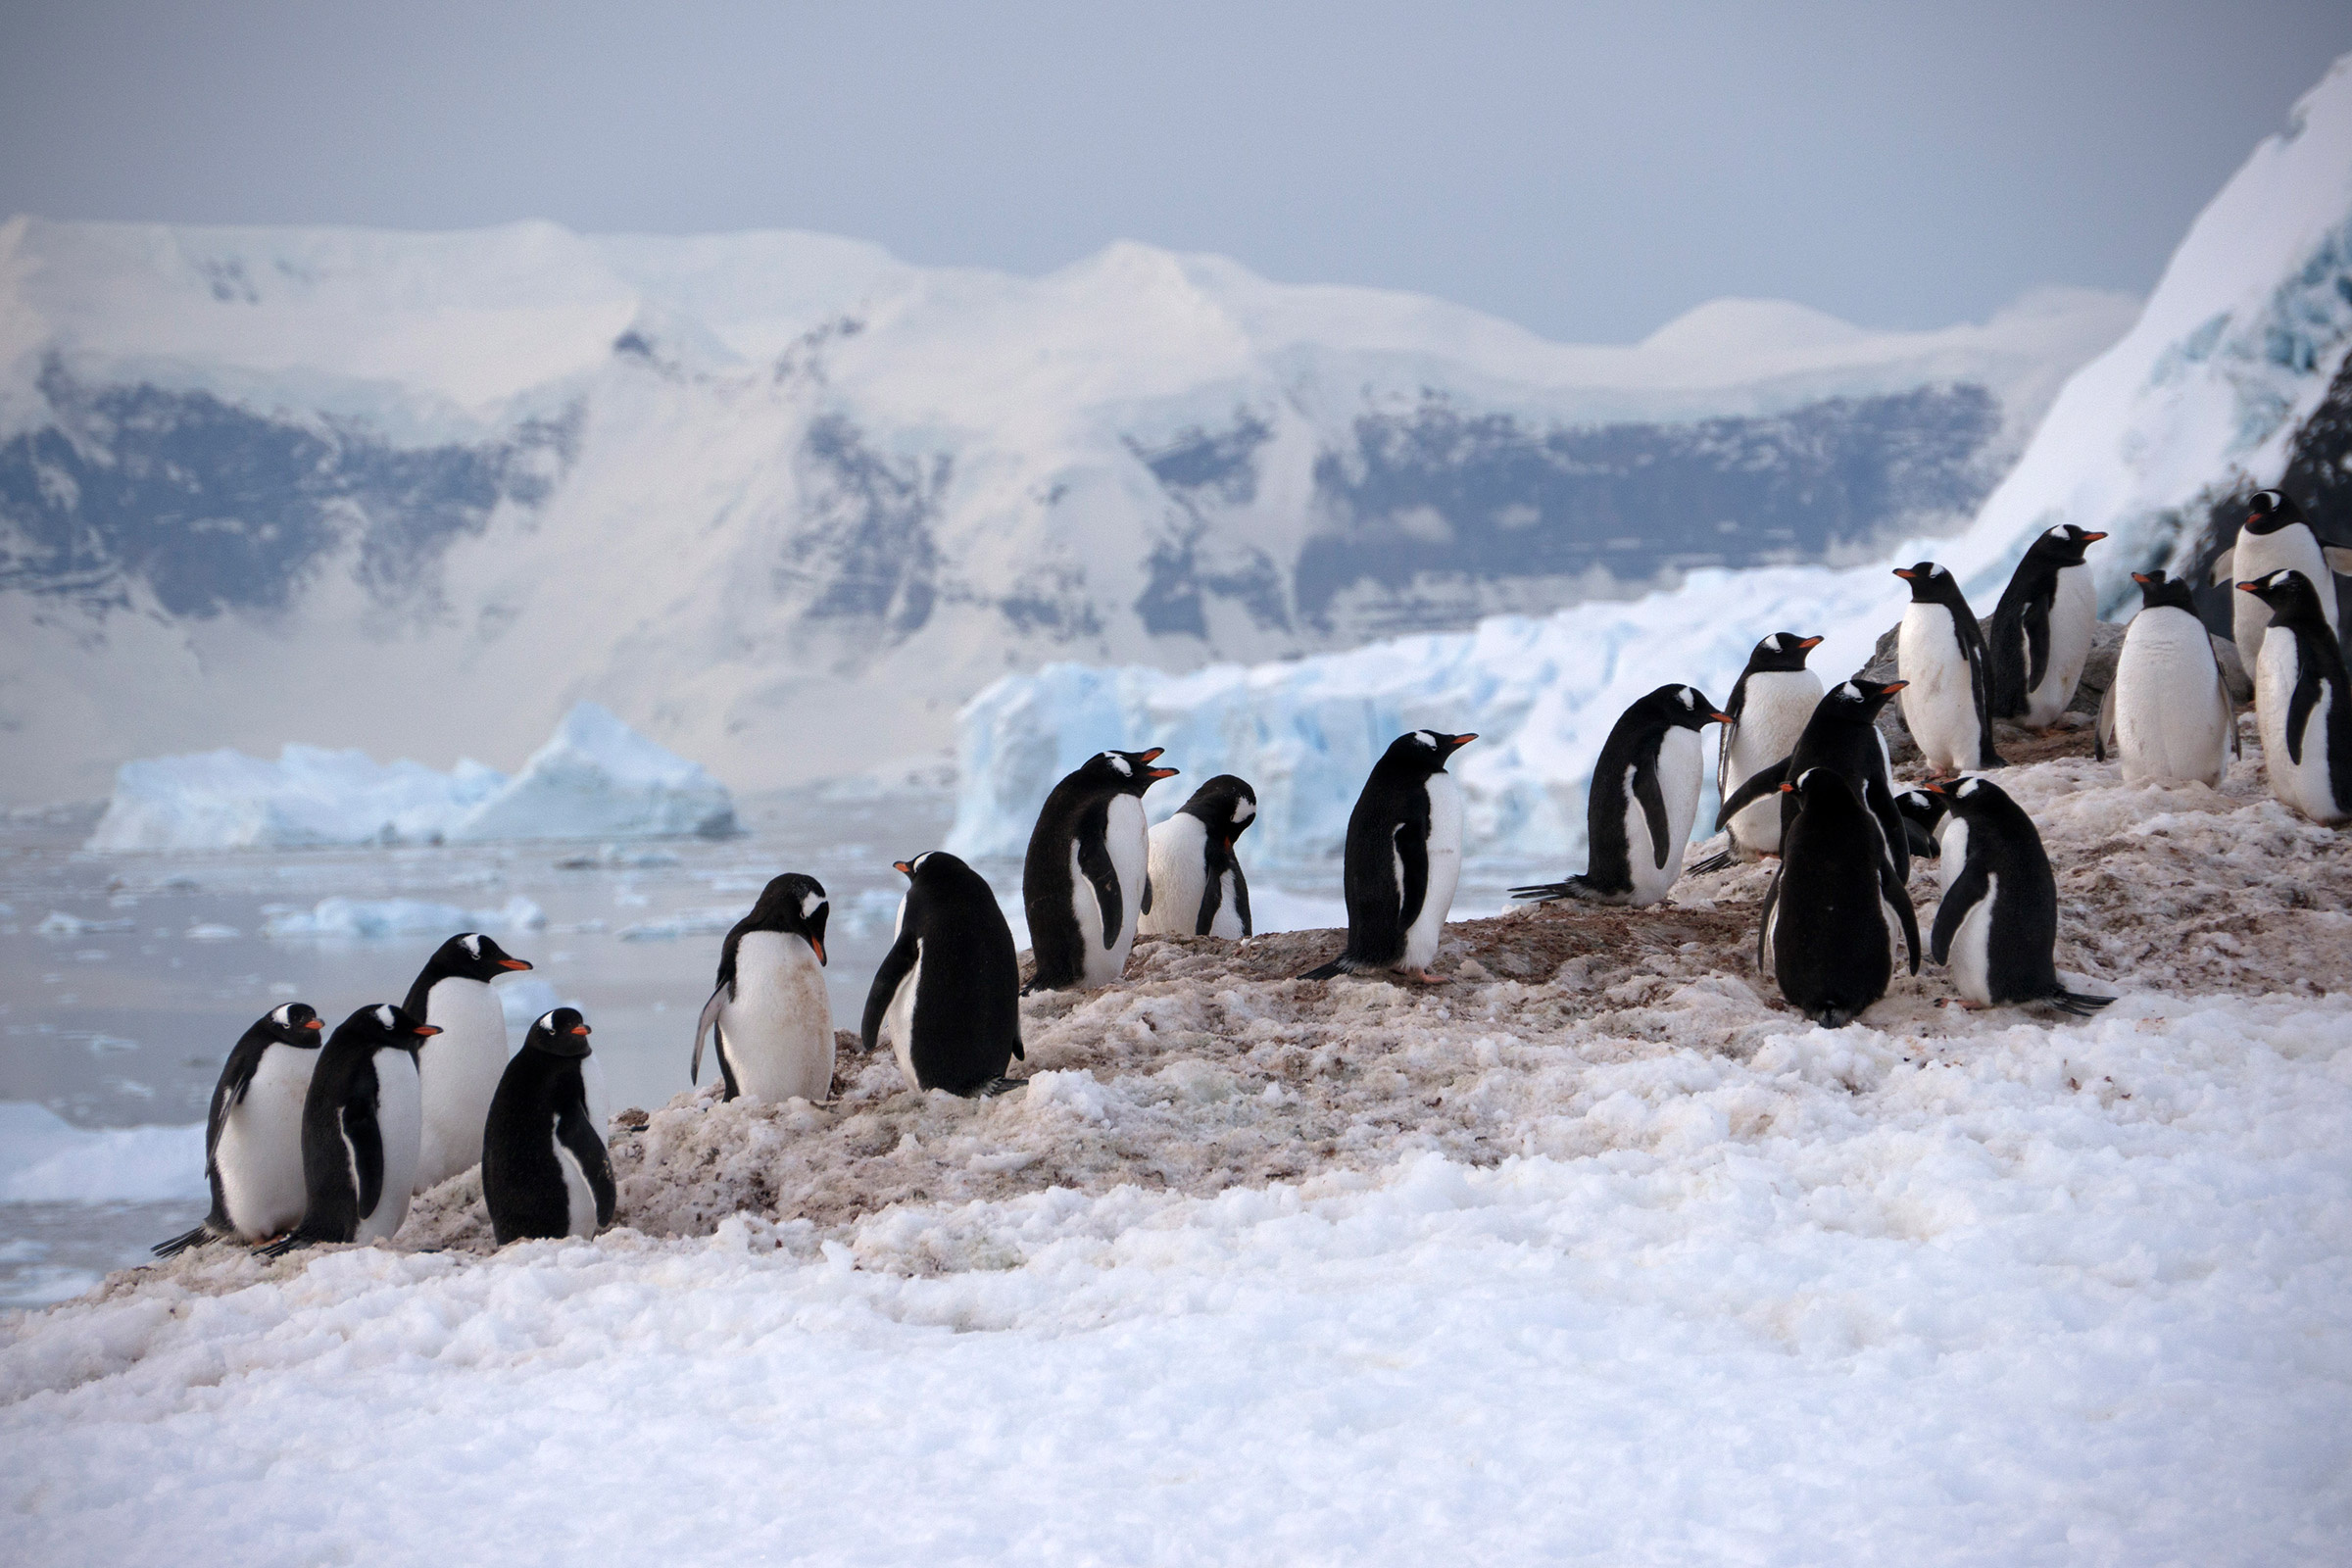 Где живут пингвины материк. Антарктида материк пингвины. Антарктический Пингвин. Арктическая пустыня пингвины. Южный полюс Антарктида.